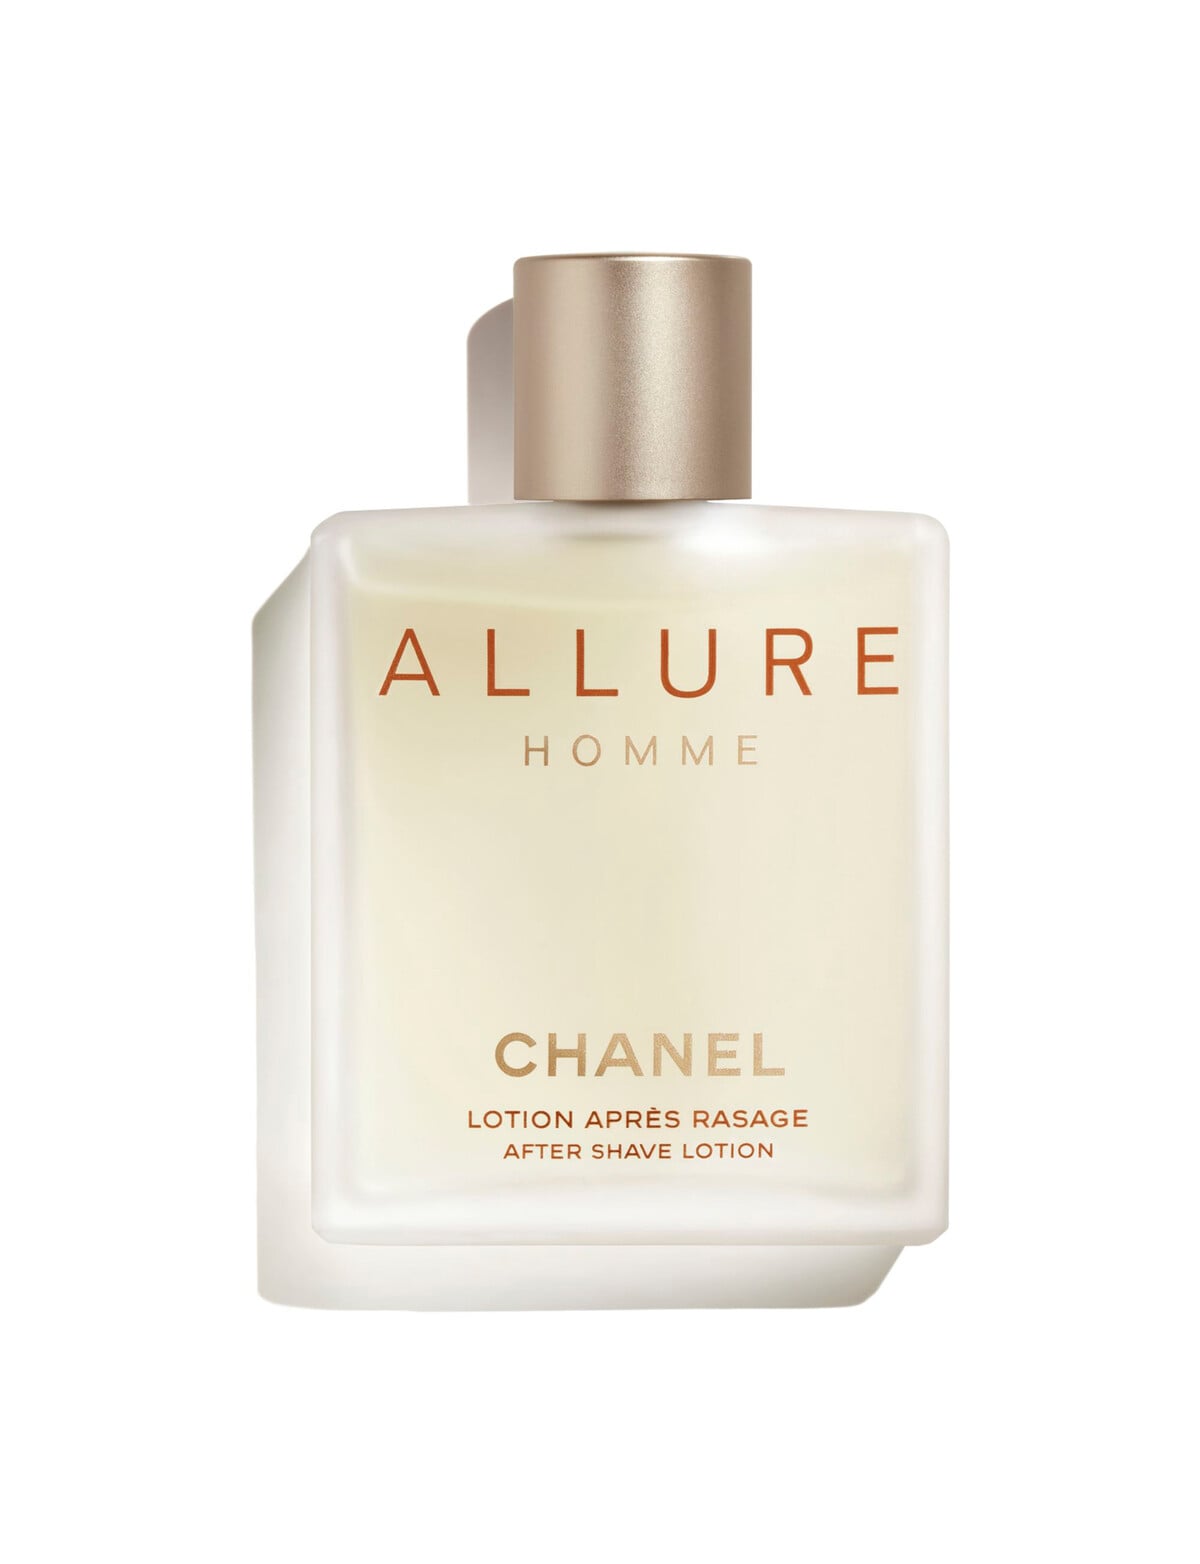 Chanel Allure Homme Sport After Shave Balm for men